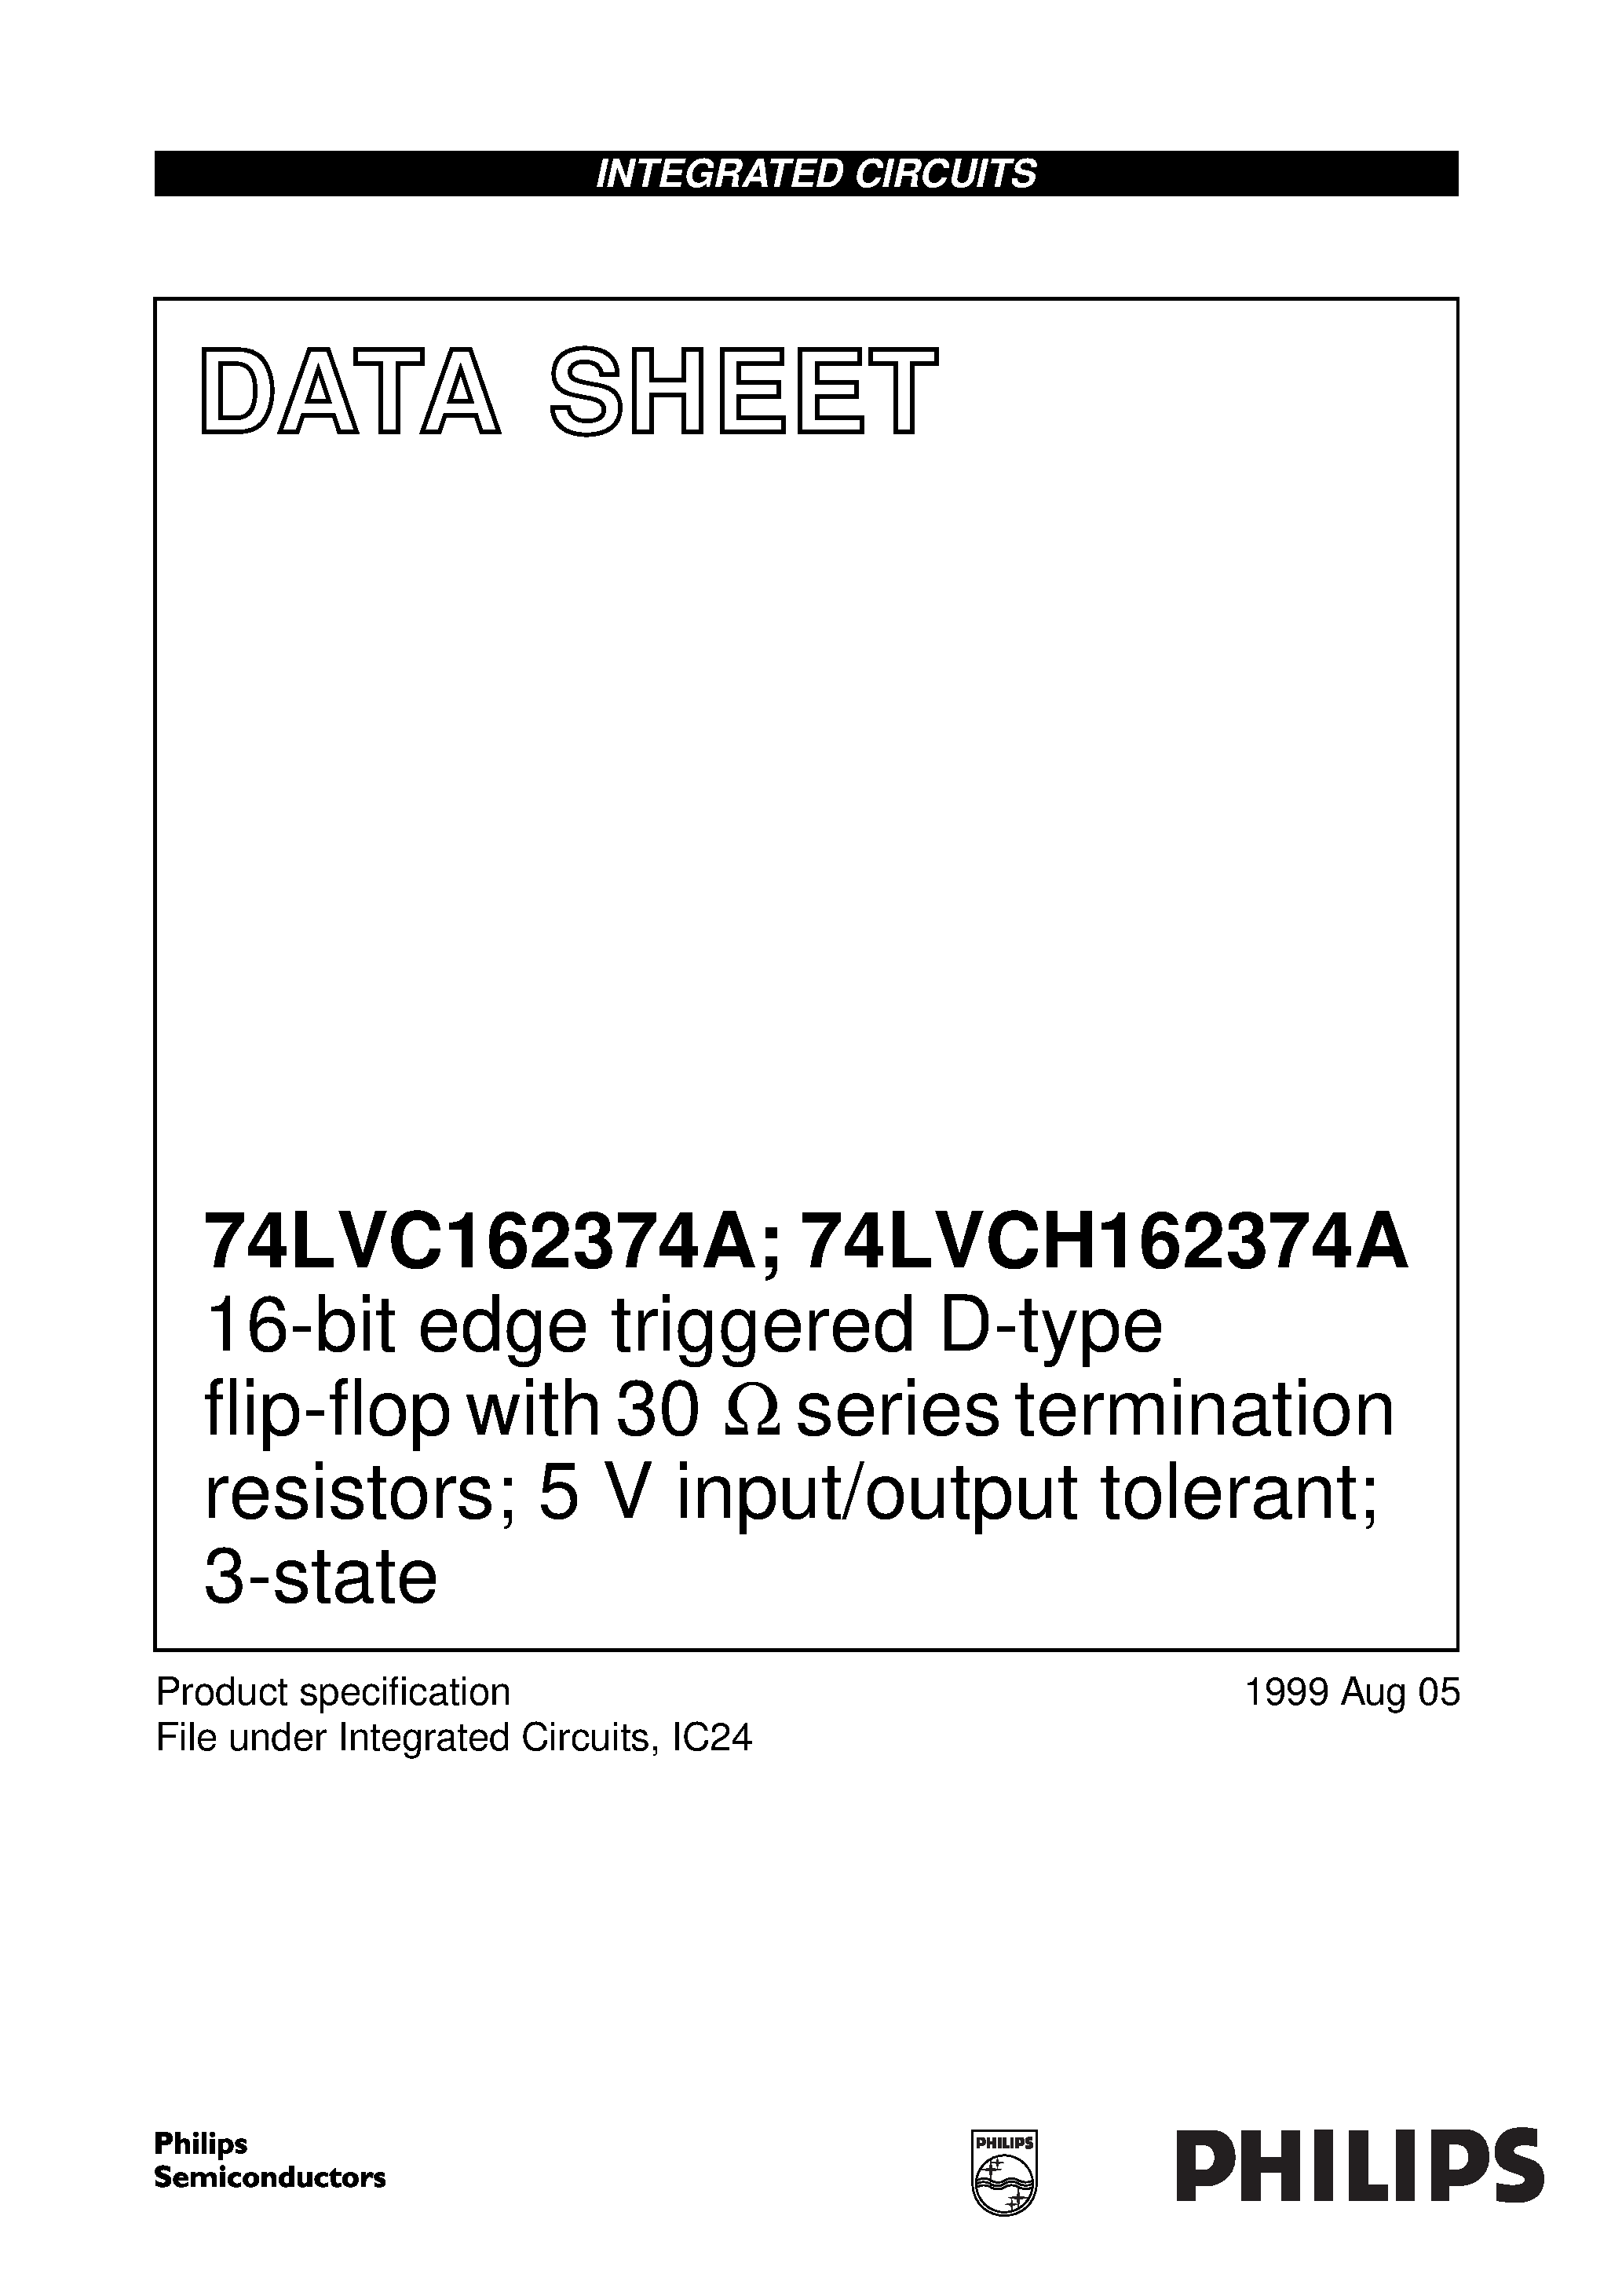 Даташит VCH162374ADGG - 16-bit edge triggered D-type flip-flop with 30 ohmseries termination resistors; 5 V input/output tolerant; 3-state страница 1